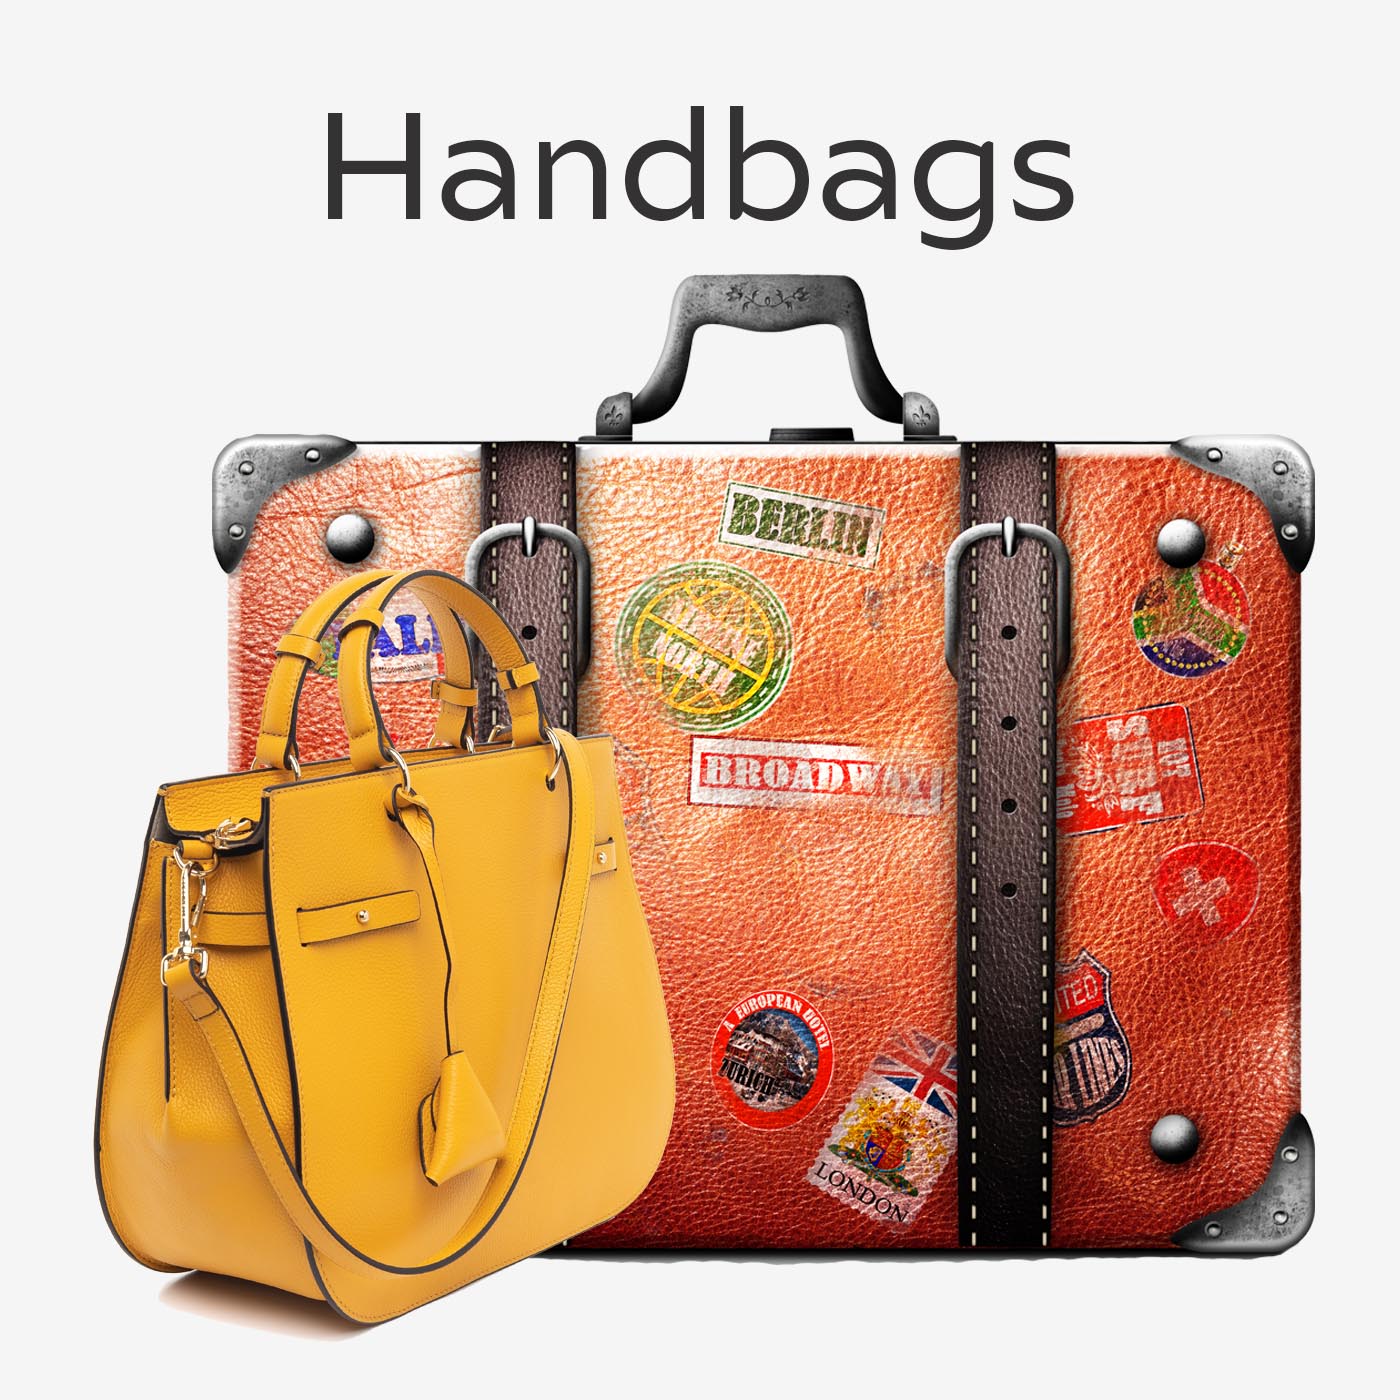 Handbags & Purses